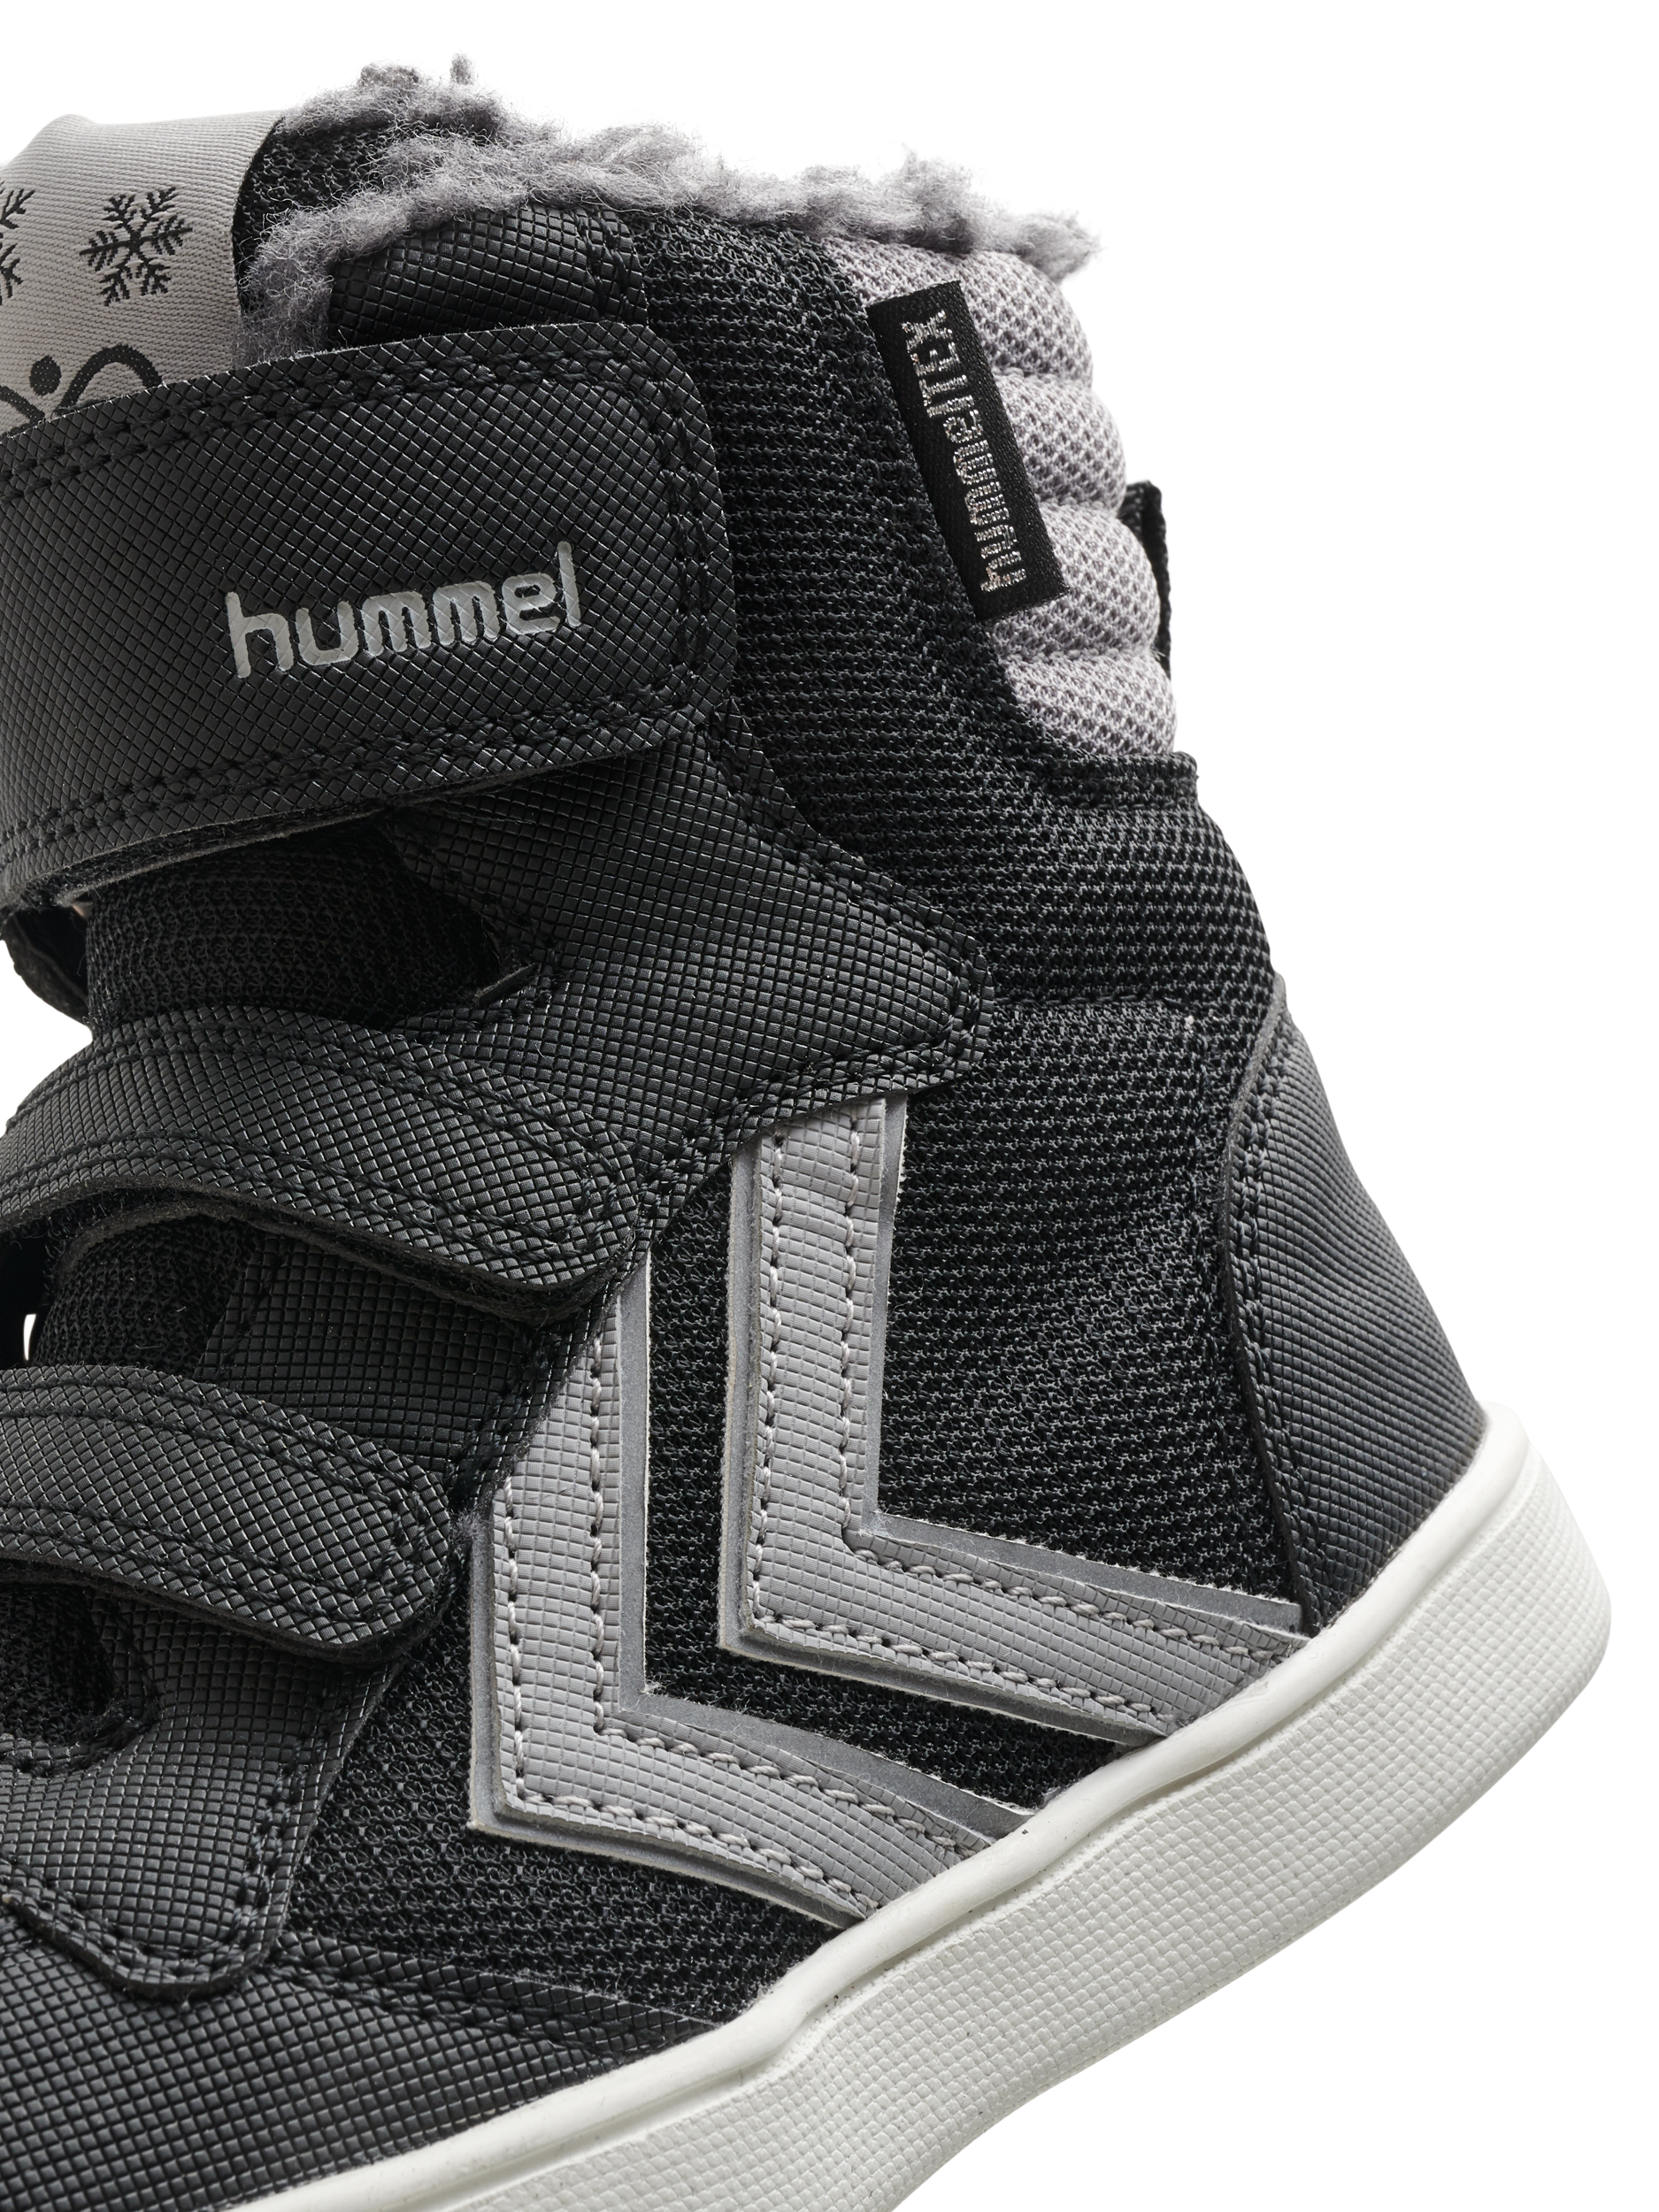 Hummel Shoes Online Sale, UP TO 68% OFF